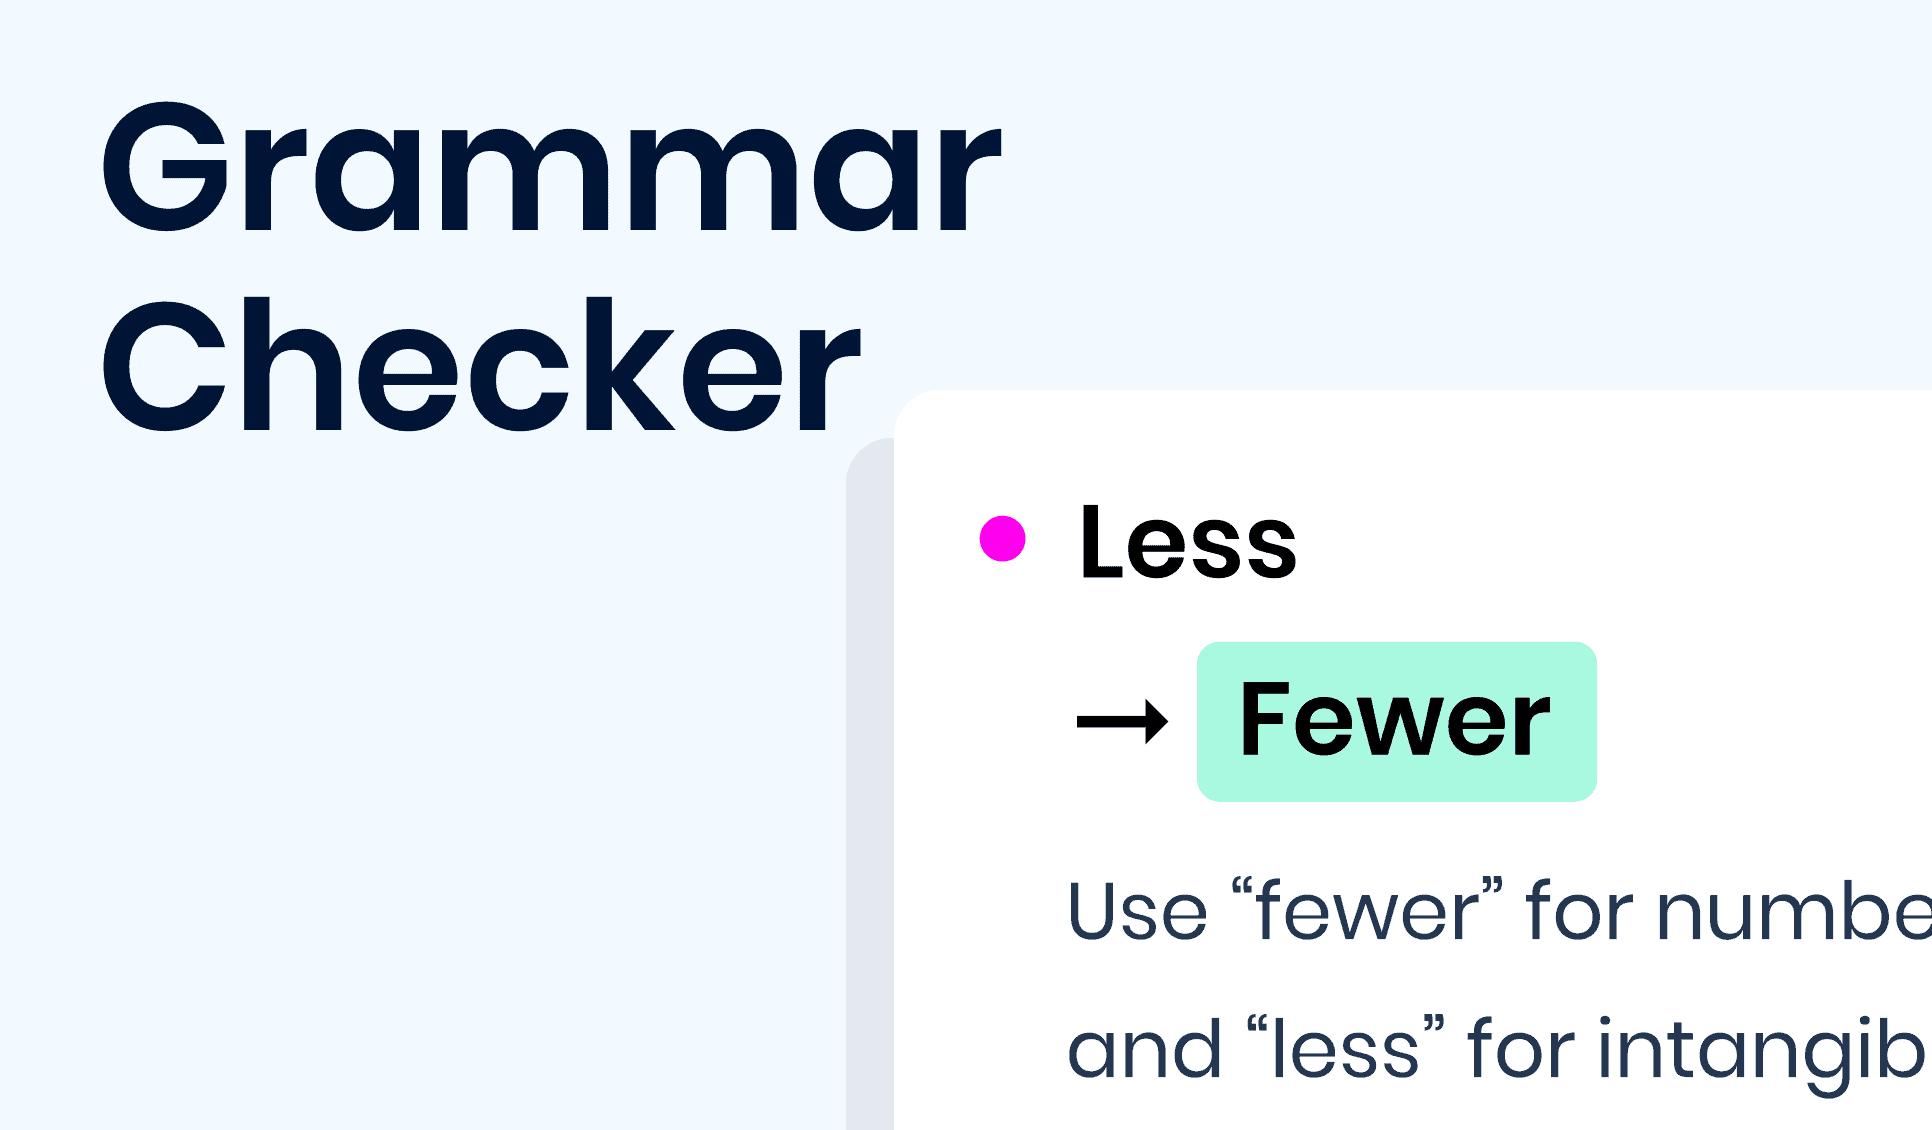 Benefits of Grammar Checker